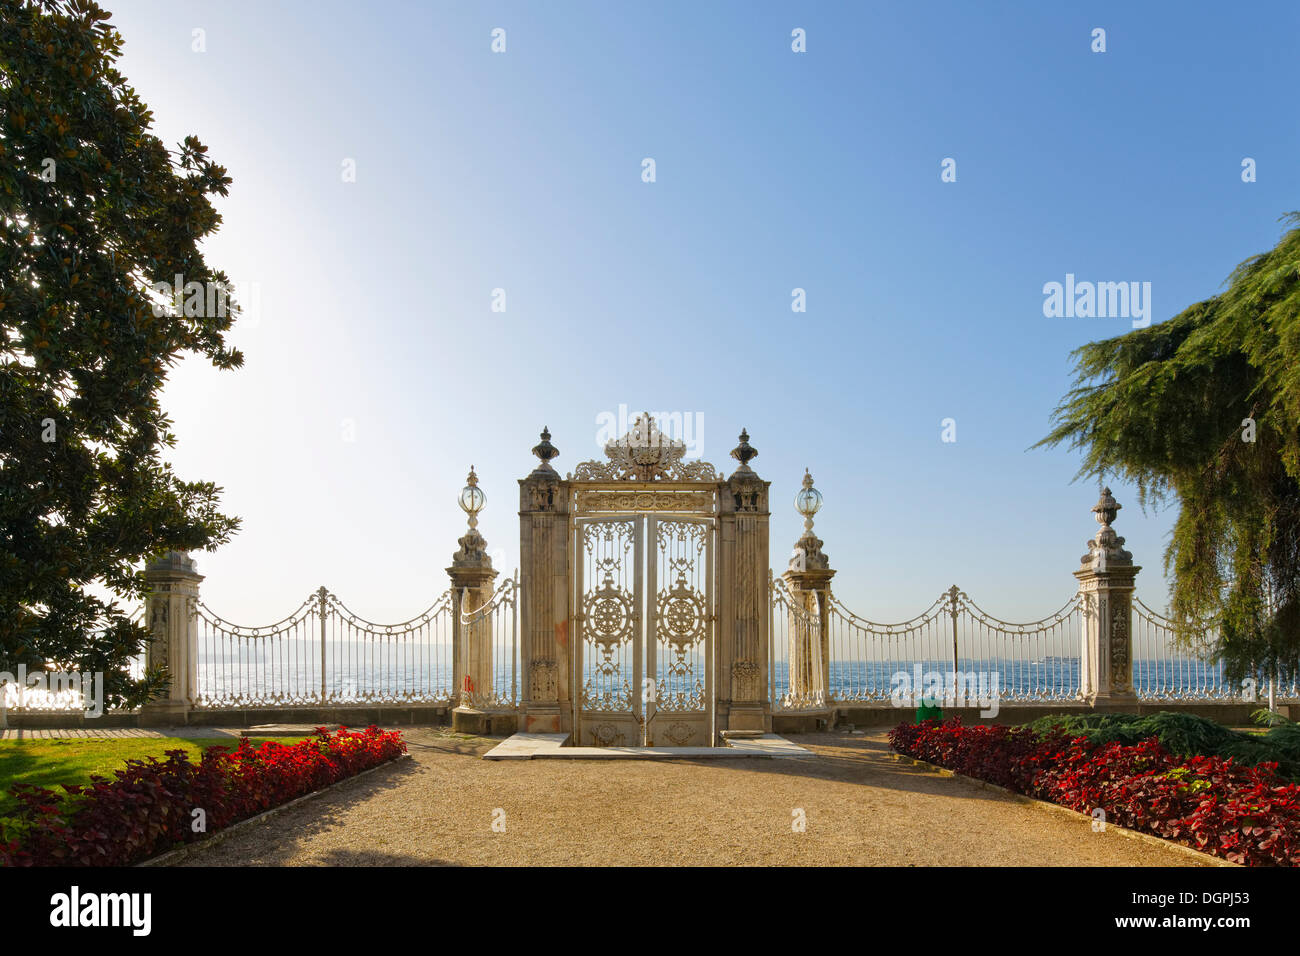 Gateway per il Bosforo nel parco del Palazzo Dolmabahçe, Dolmabahçe Sarayi, Beşiktaş, Istanbul, lato europeo Foto Stock